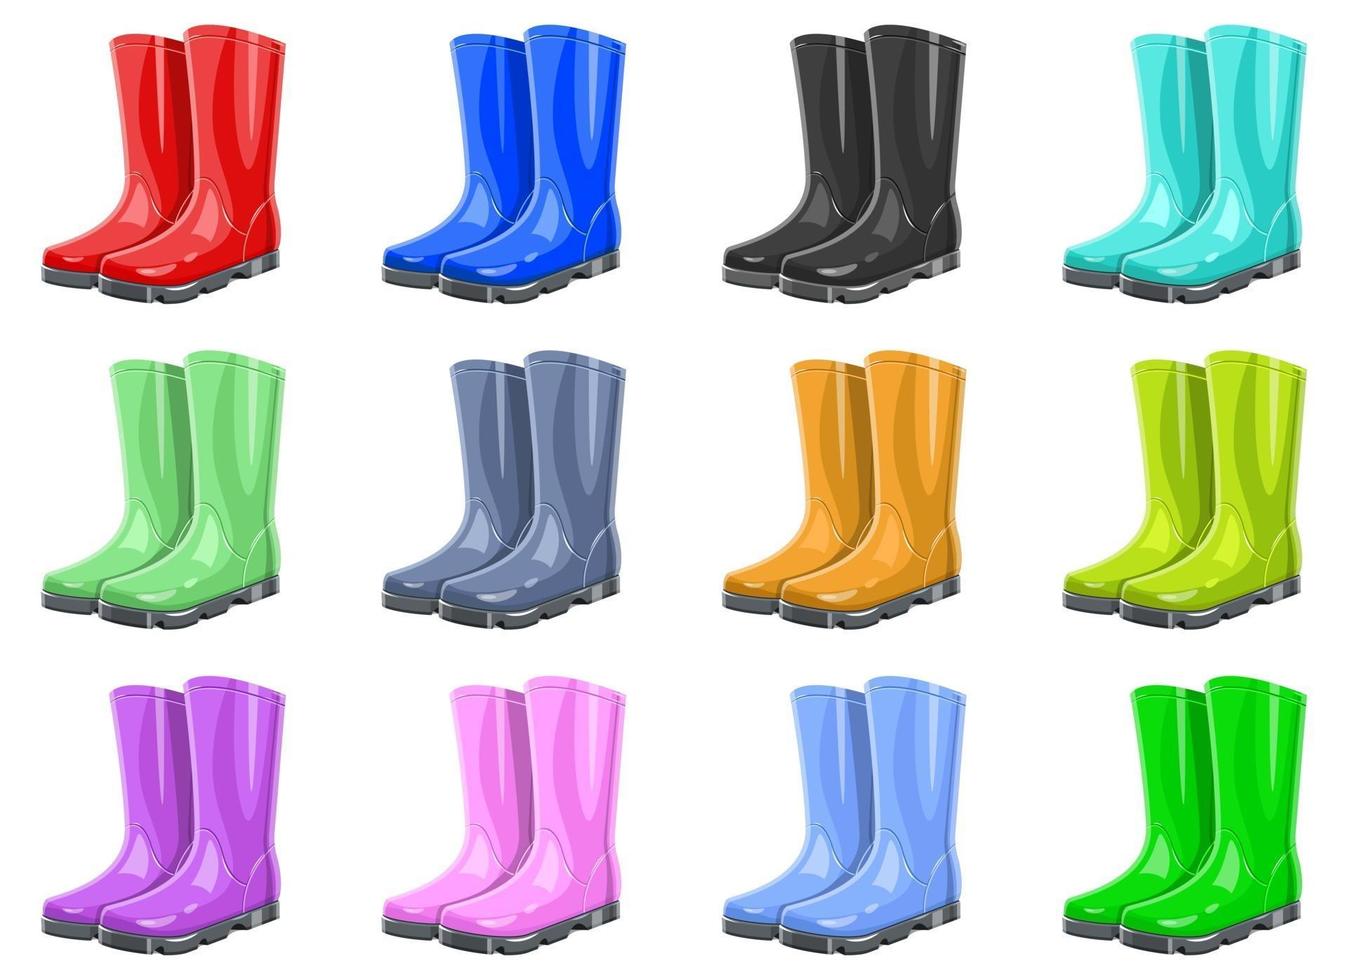 Rubber garden boots vector design illustration set isolated on white background